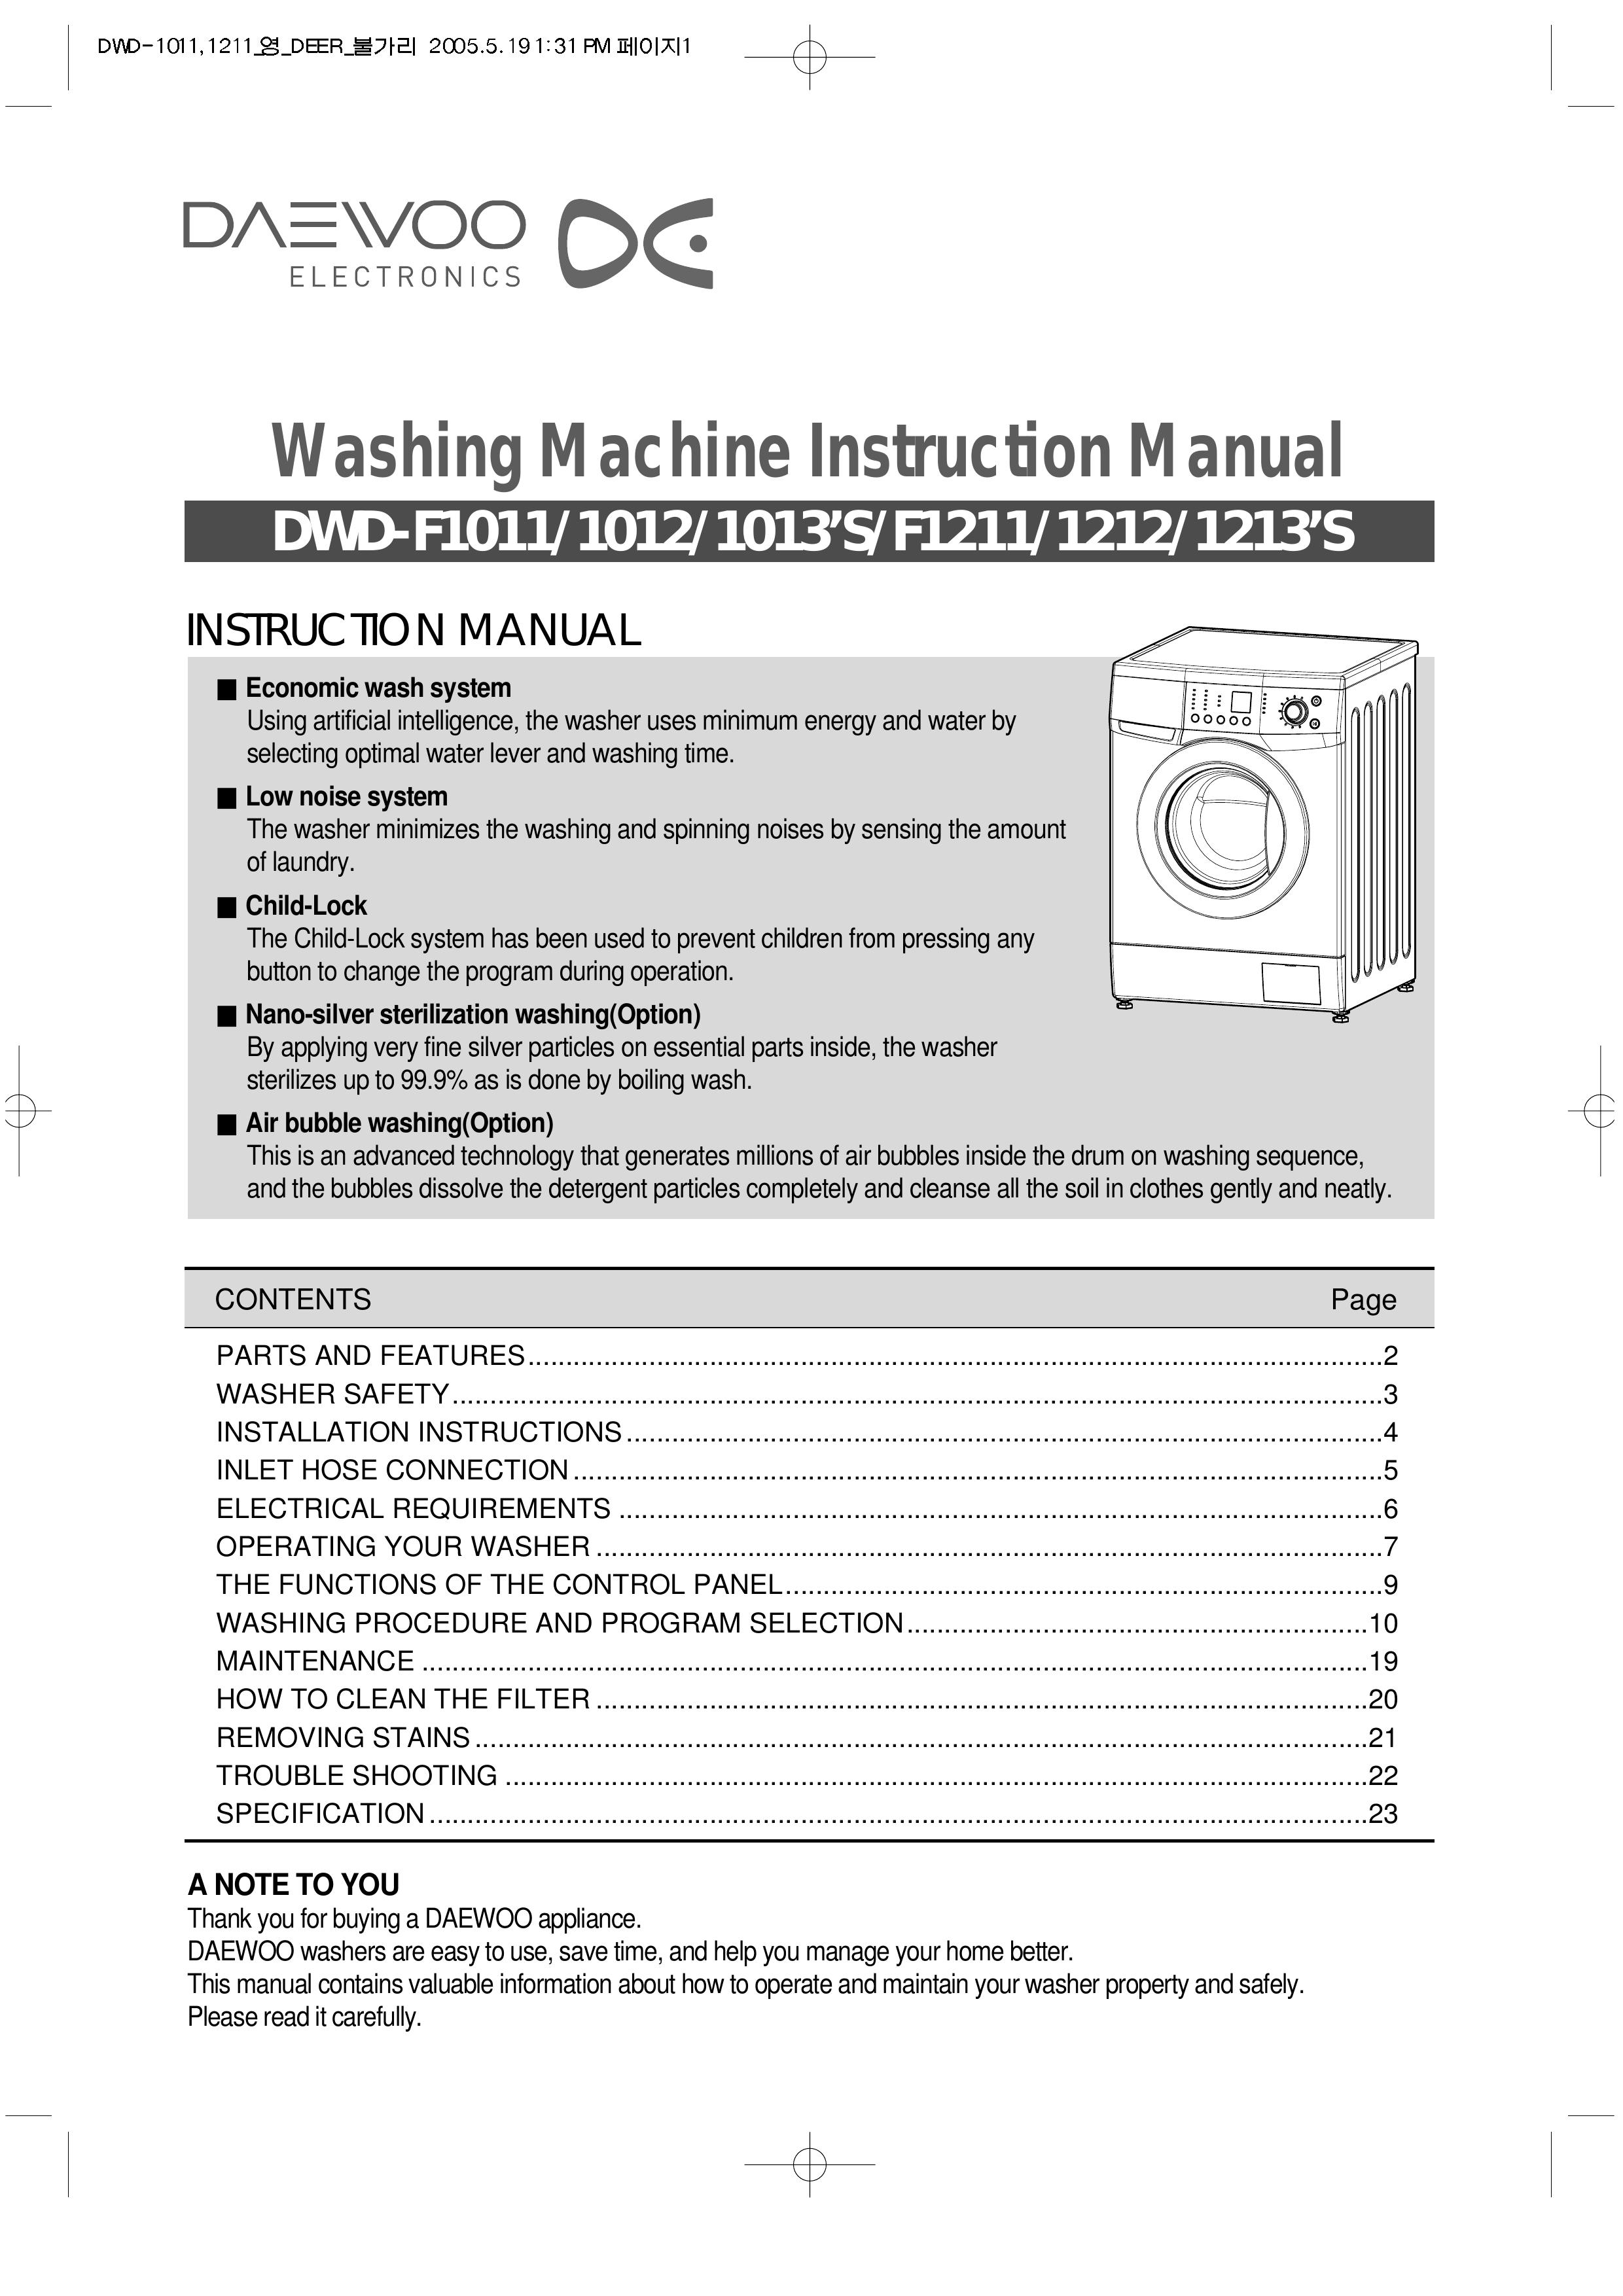 Daewoo DWD-F1011 Washer/Dryer User Manual